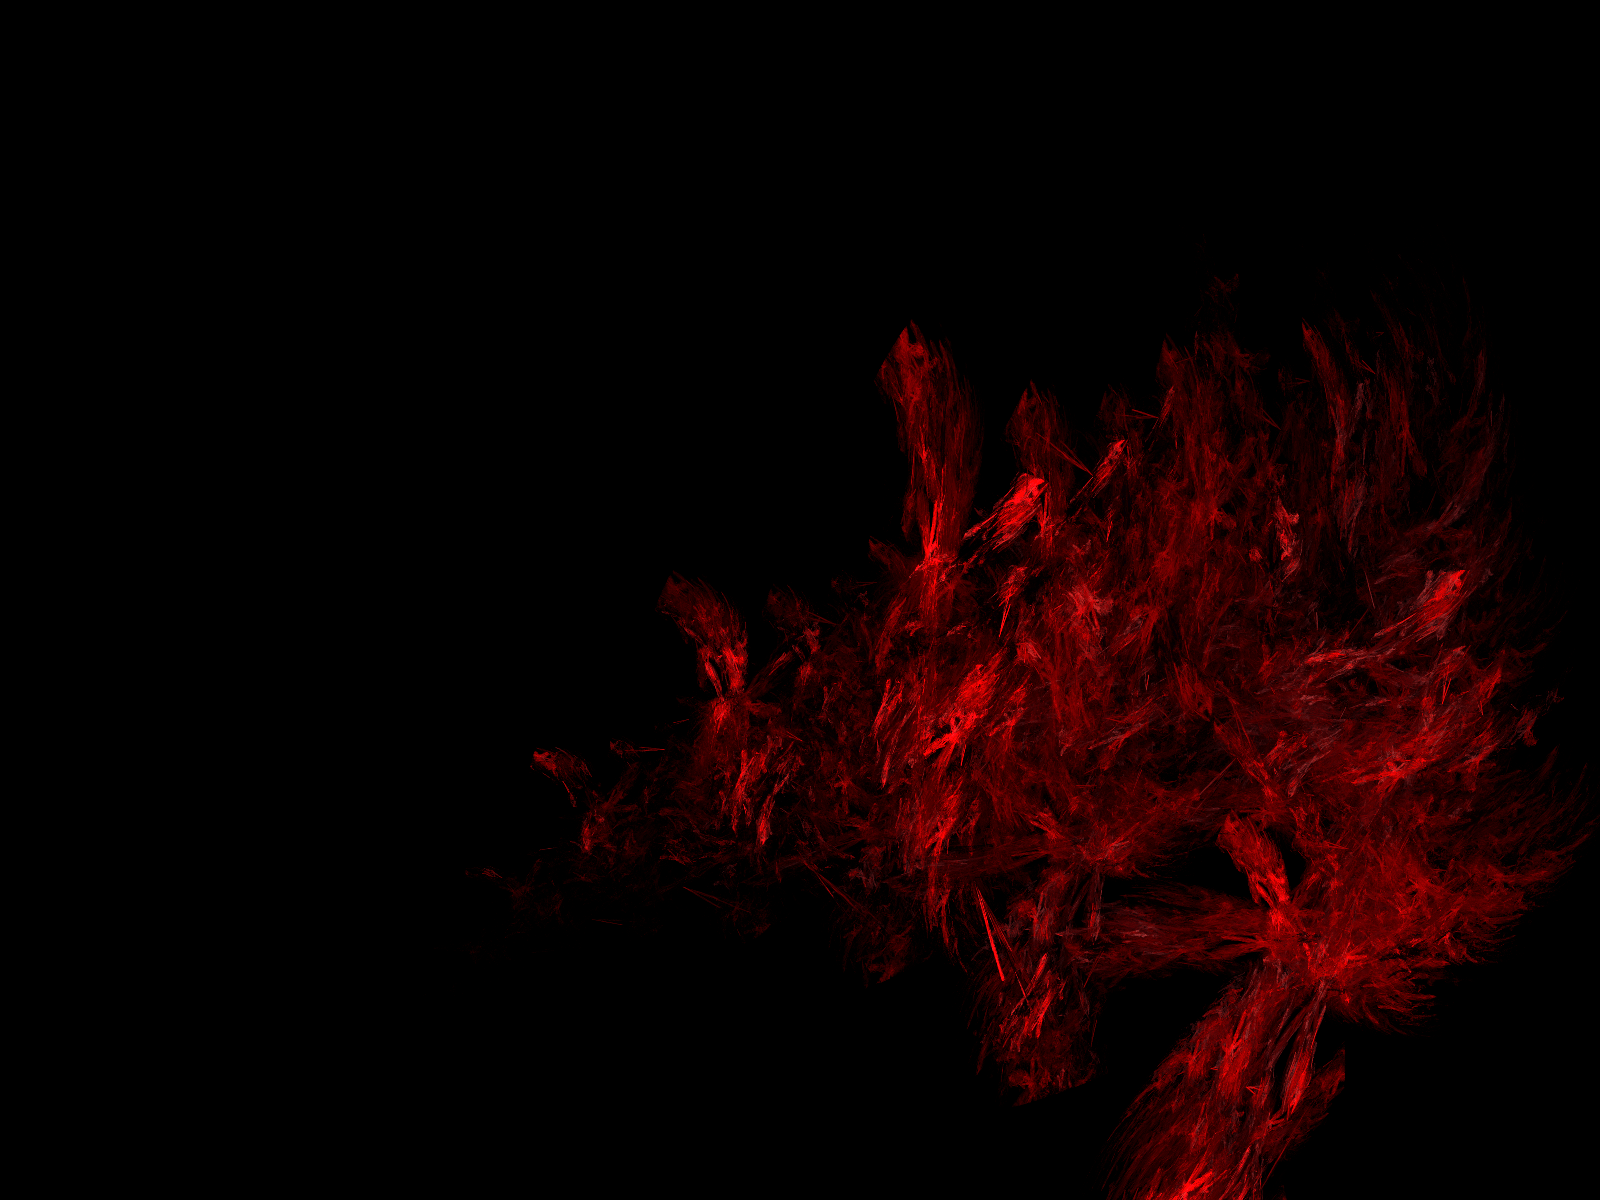 Black and Red Heart Wallpaper. HD Wallpaper. Black